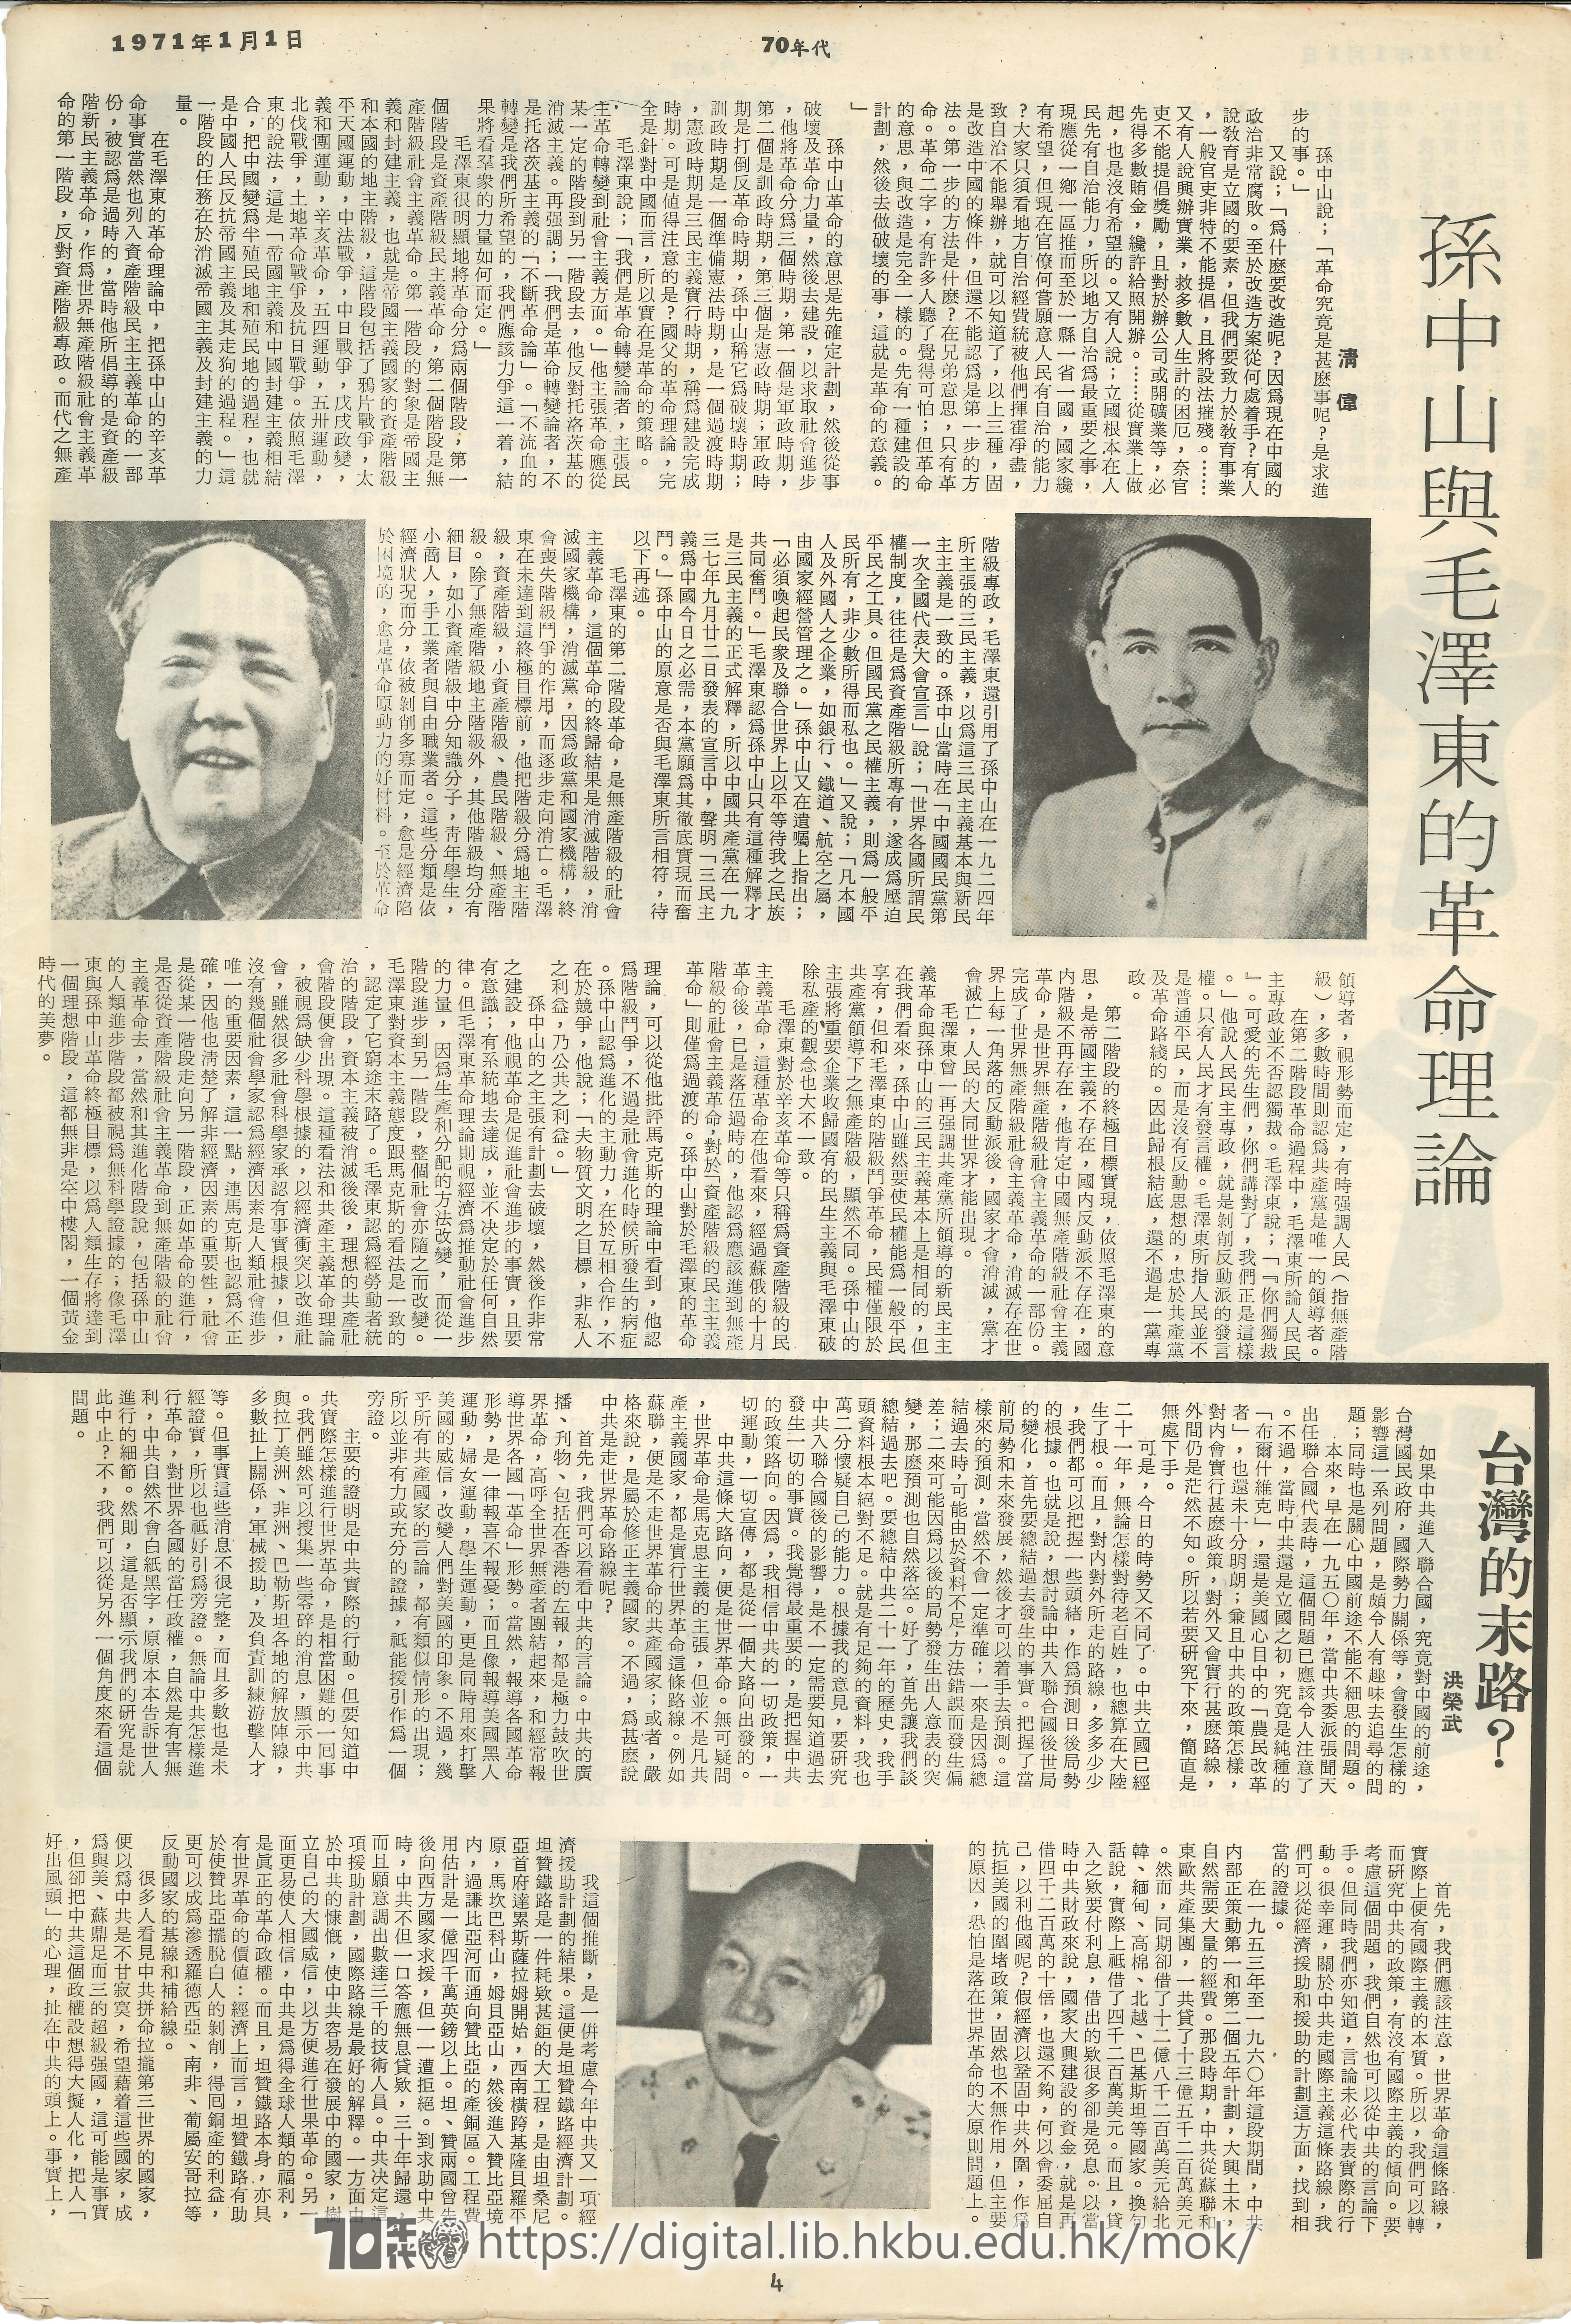  17 Revolutionary theories of Sun Yat-sen and Mao Zedong 清偉 